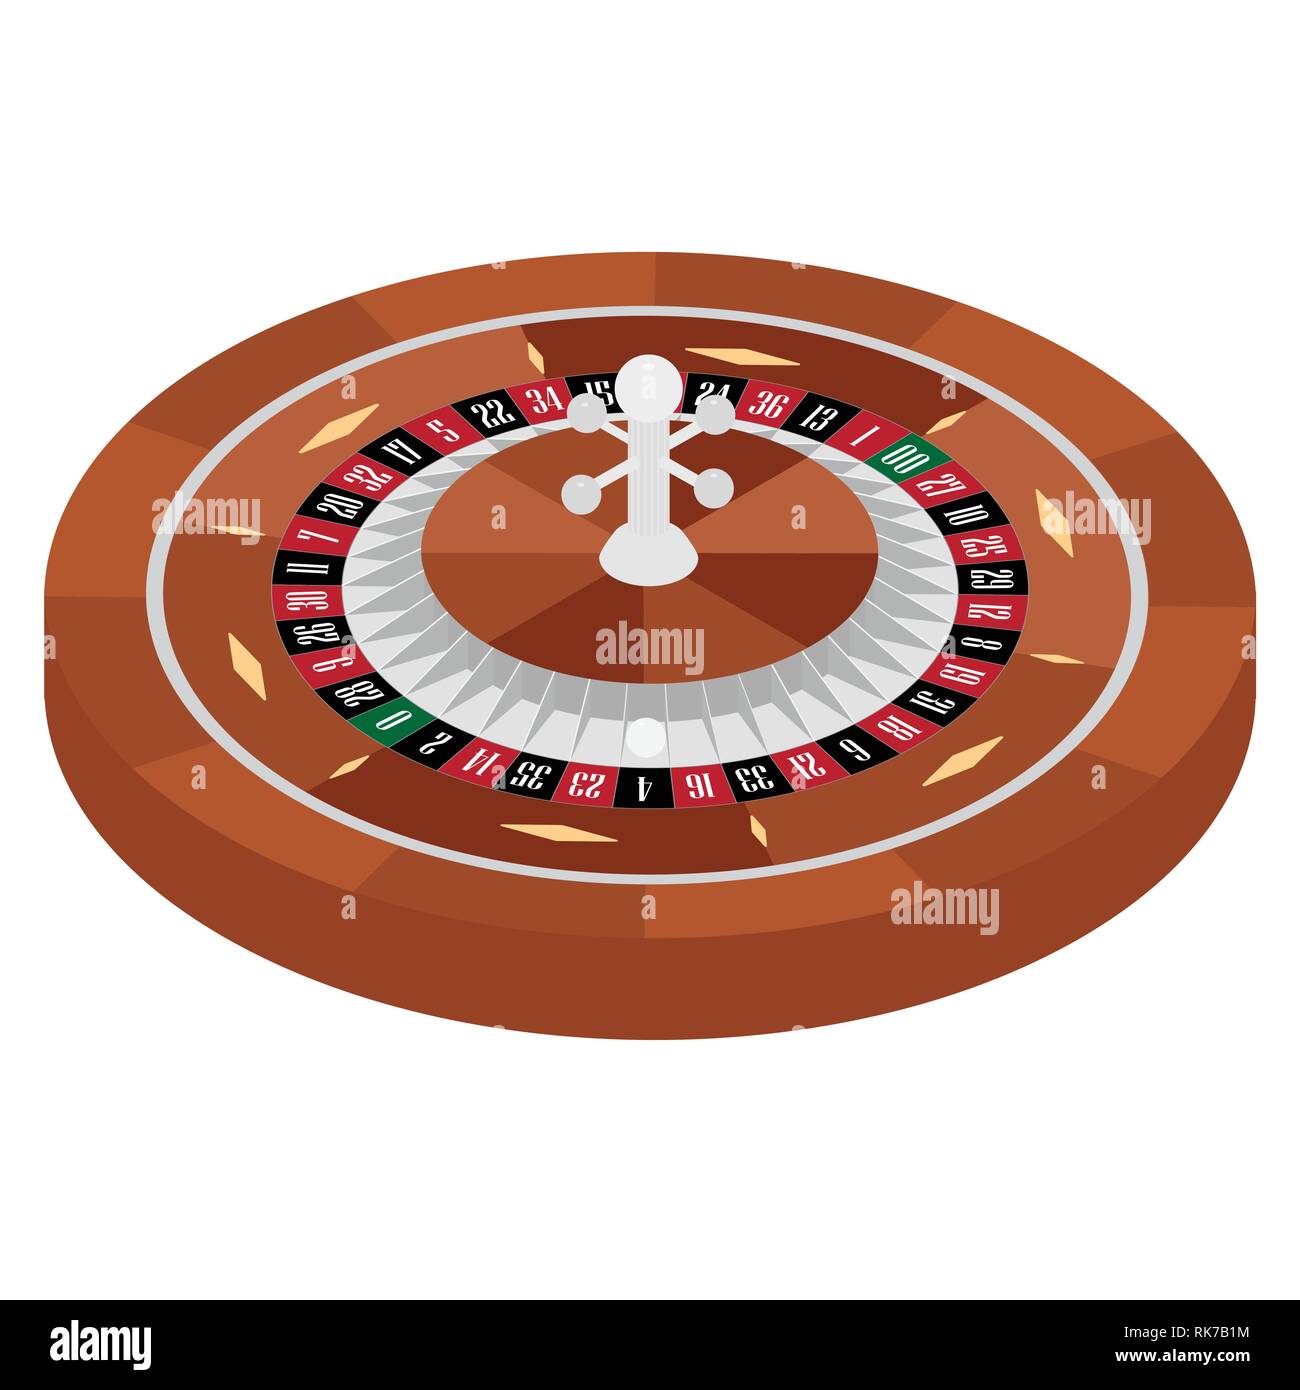 casino european roulette vector 2551491 Vector Art at Vecteezy